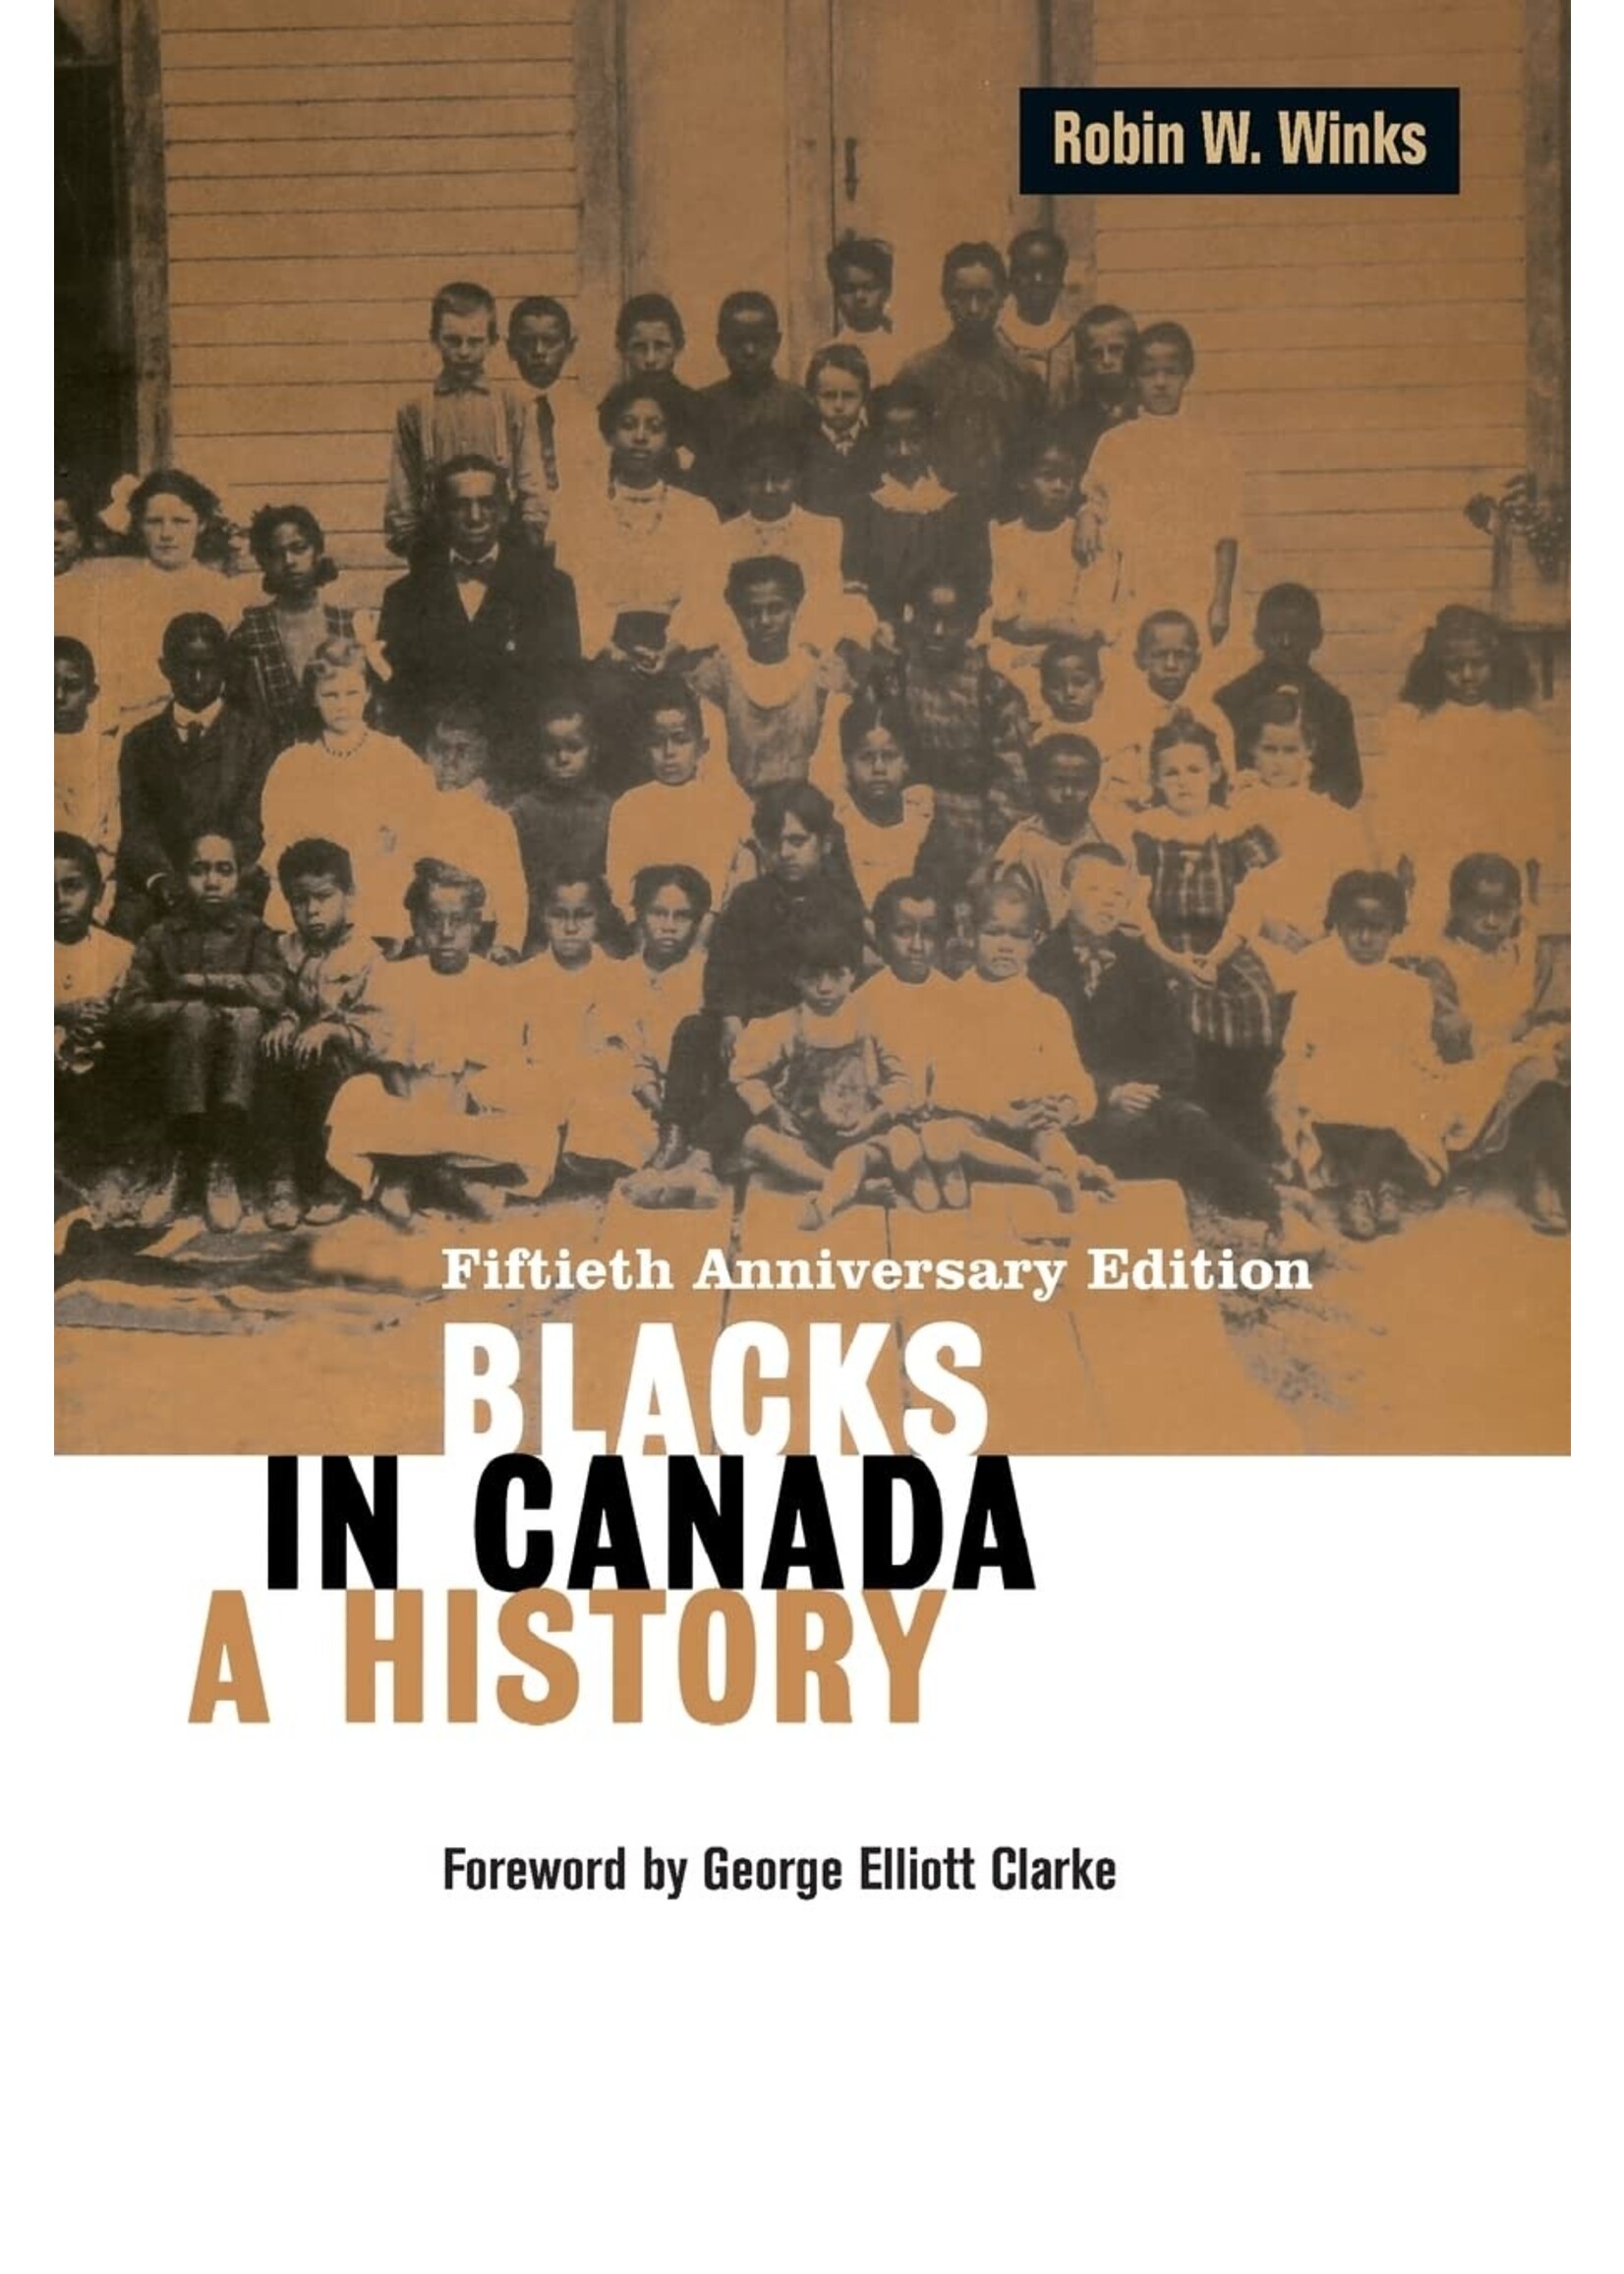 Blacks in Canada: A History